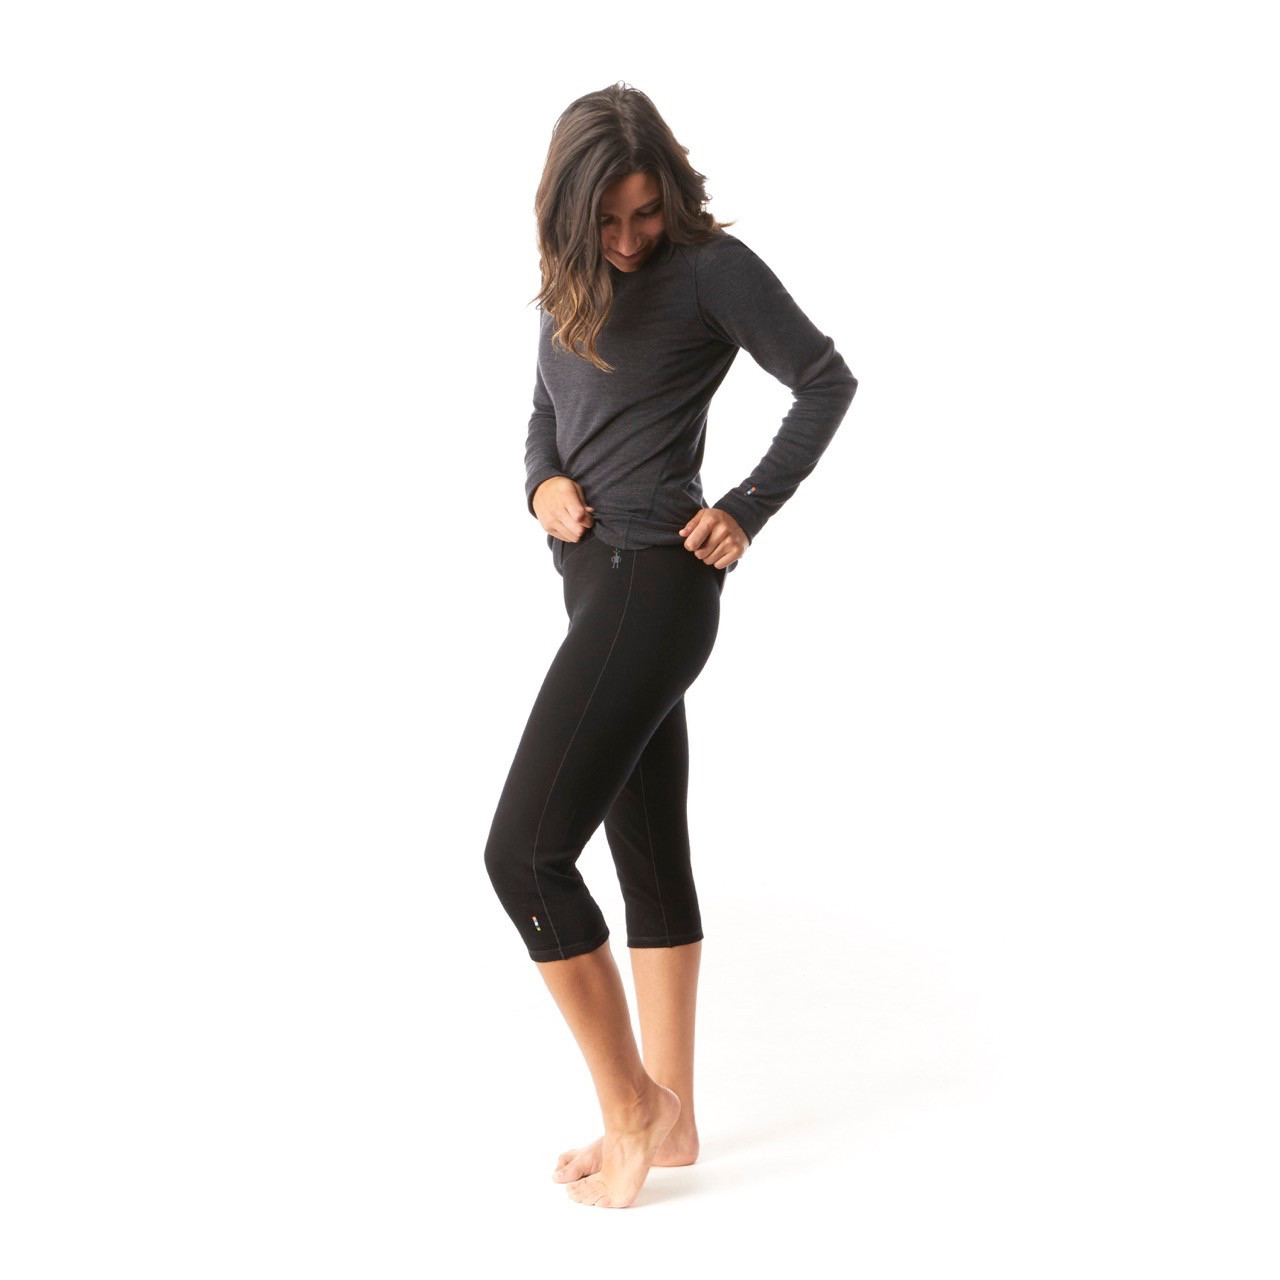 Smartwool, Pants & Jumpsuits, Smartwool Merino 25 Wool Thermal Base Layer  Pant Womens Xs Gray Leggings